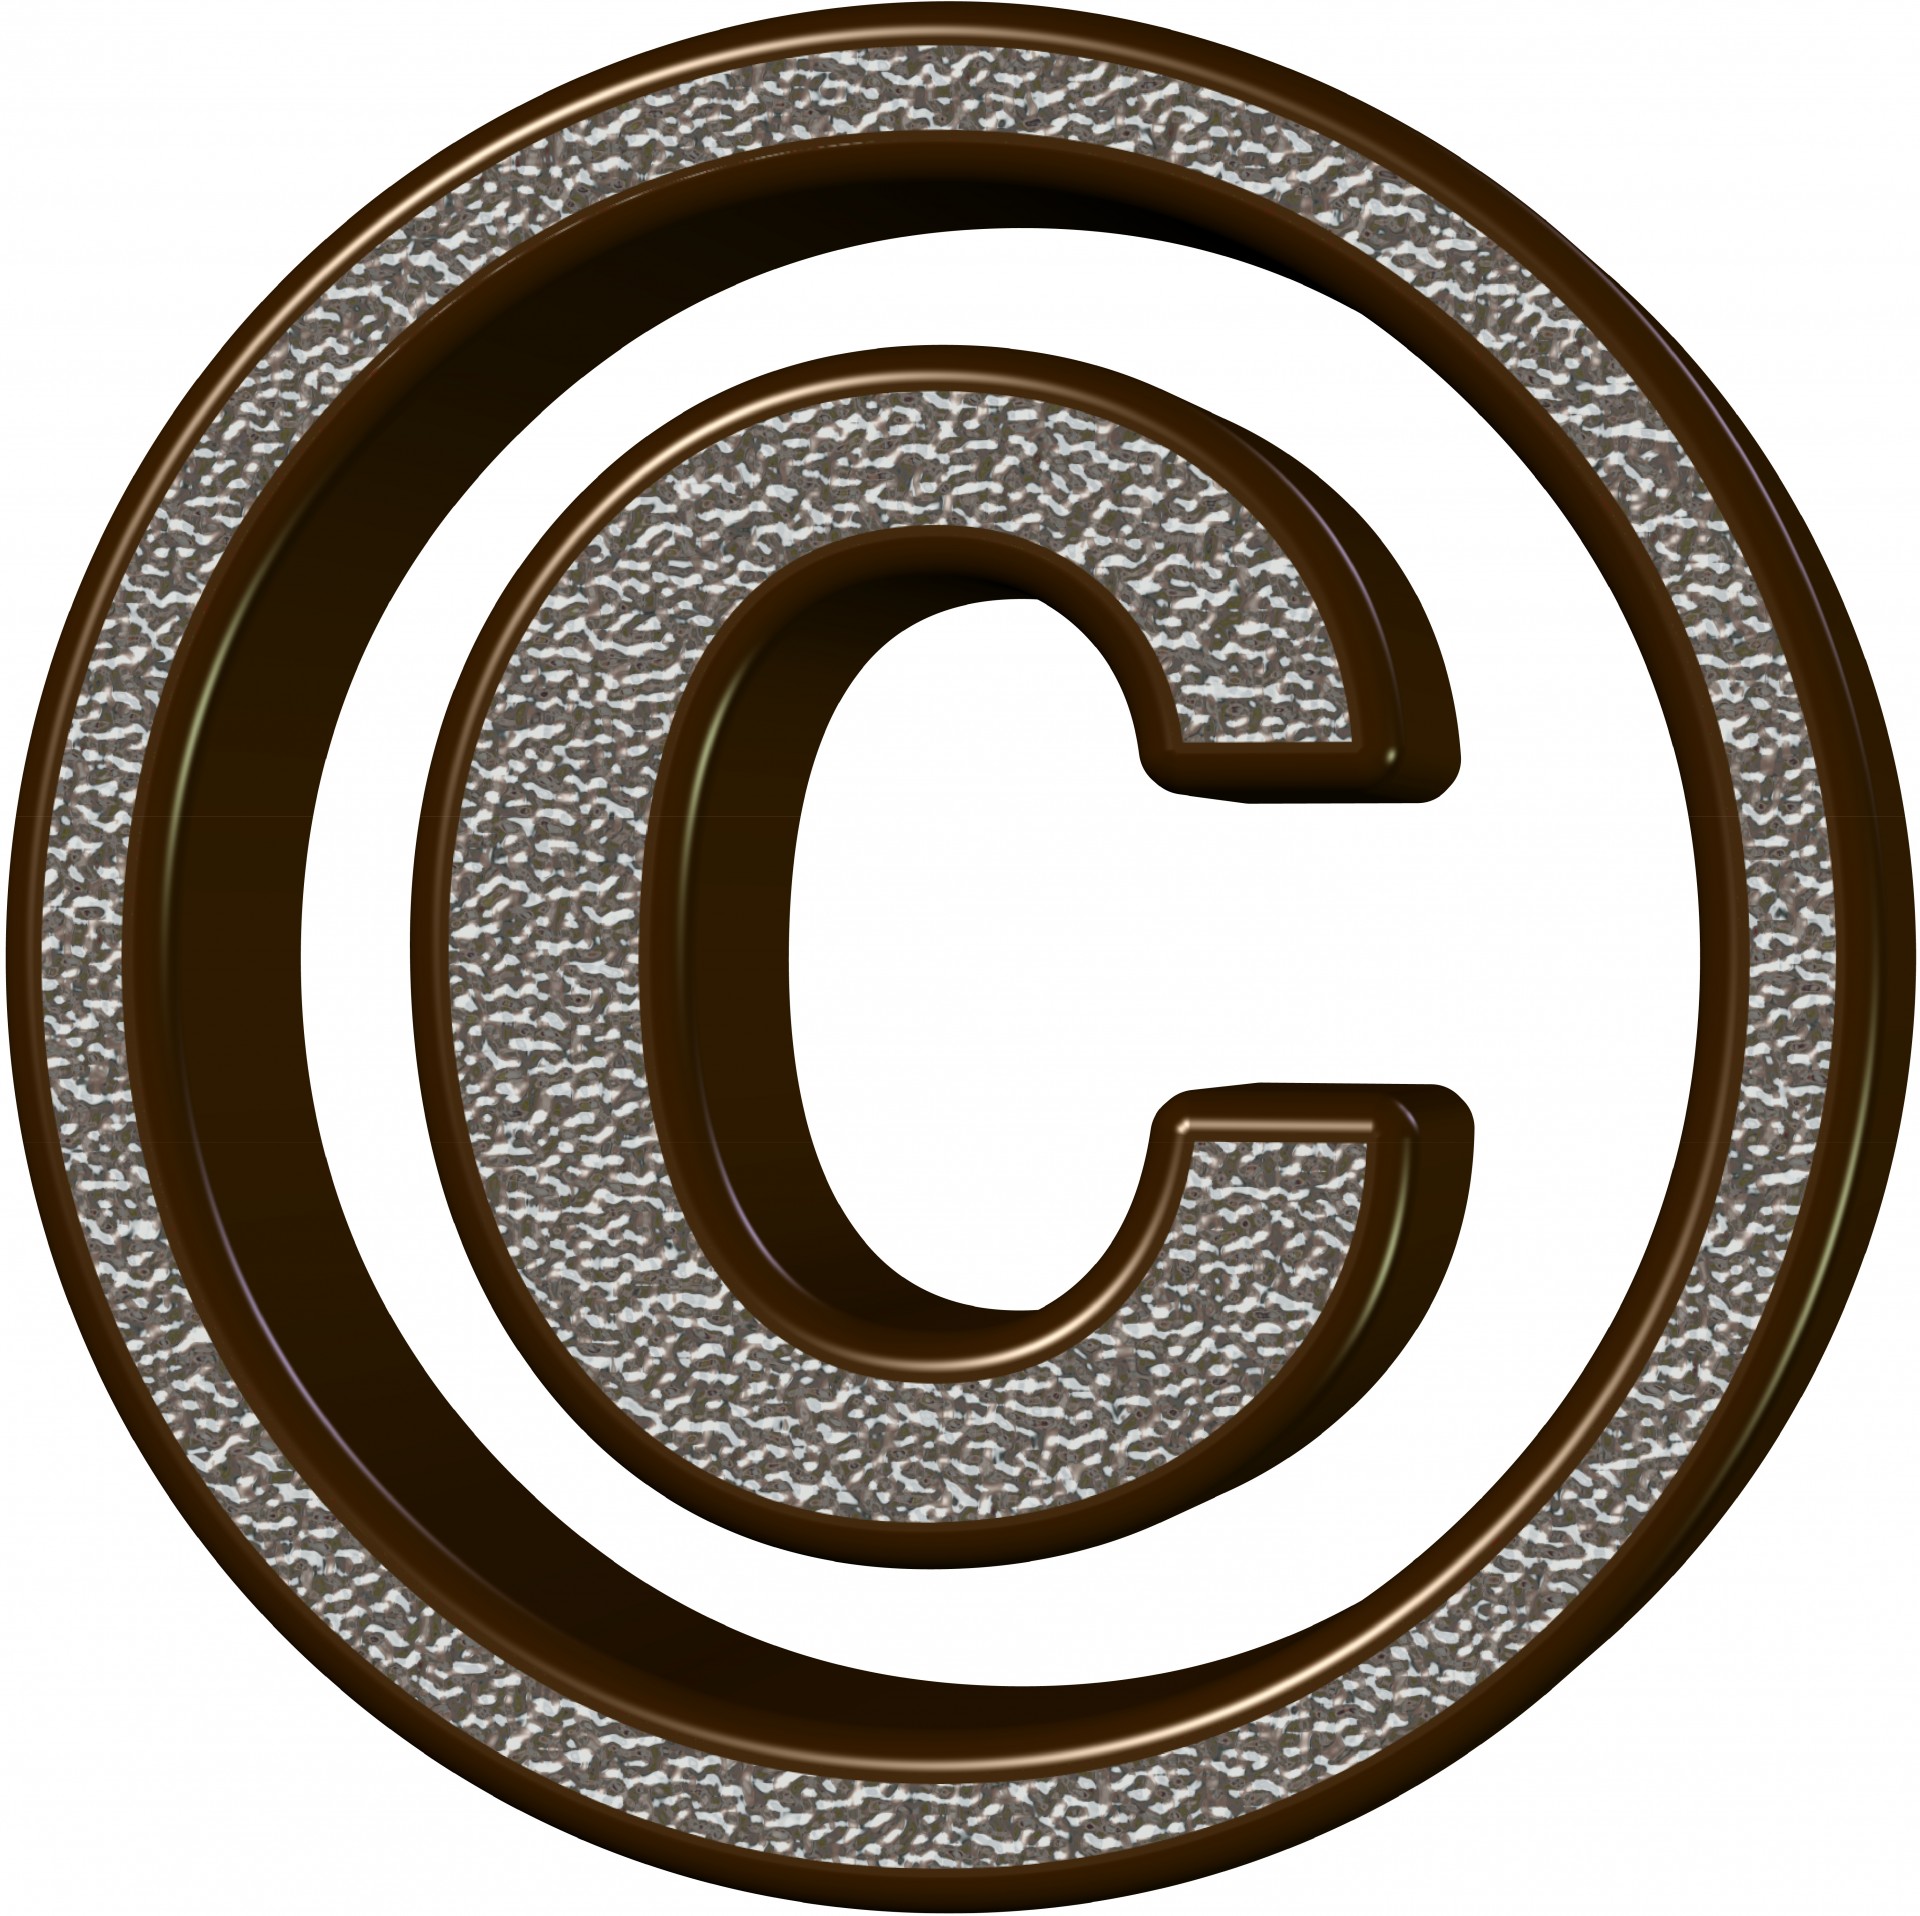 Krom copyrightsymbol